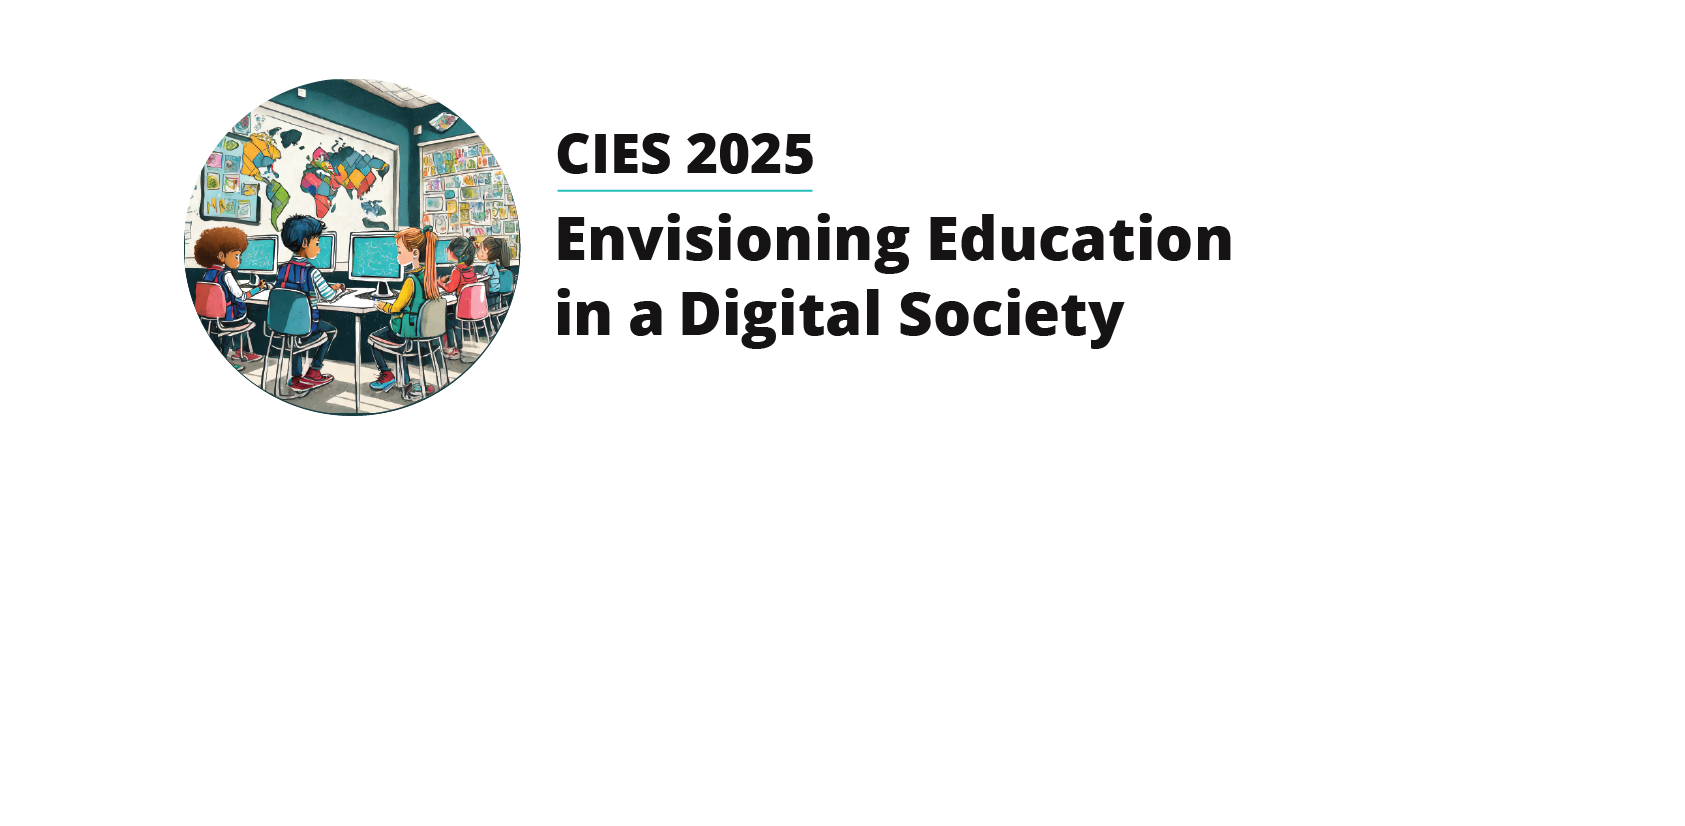 CIES 2025 - Envisioning Education in a Digital Society